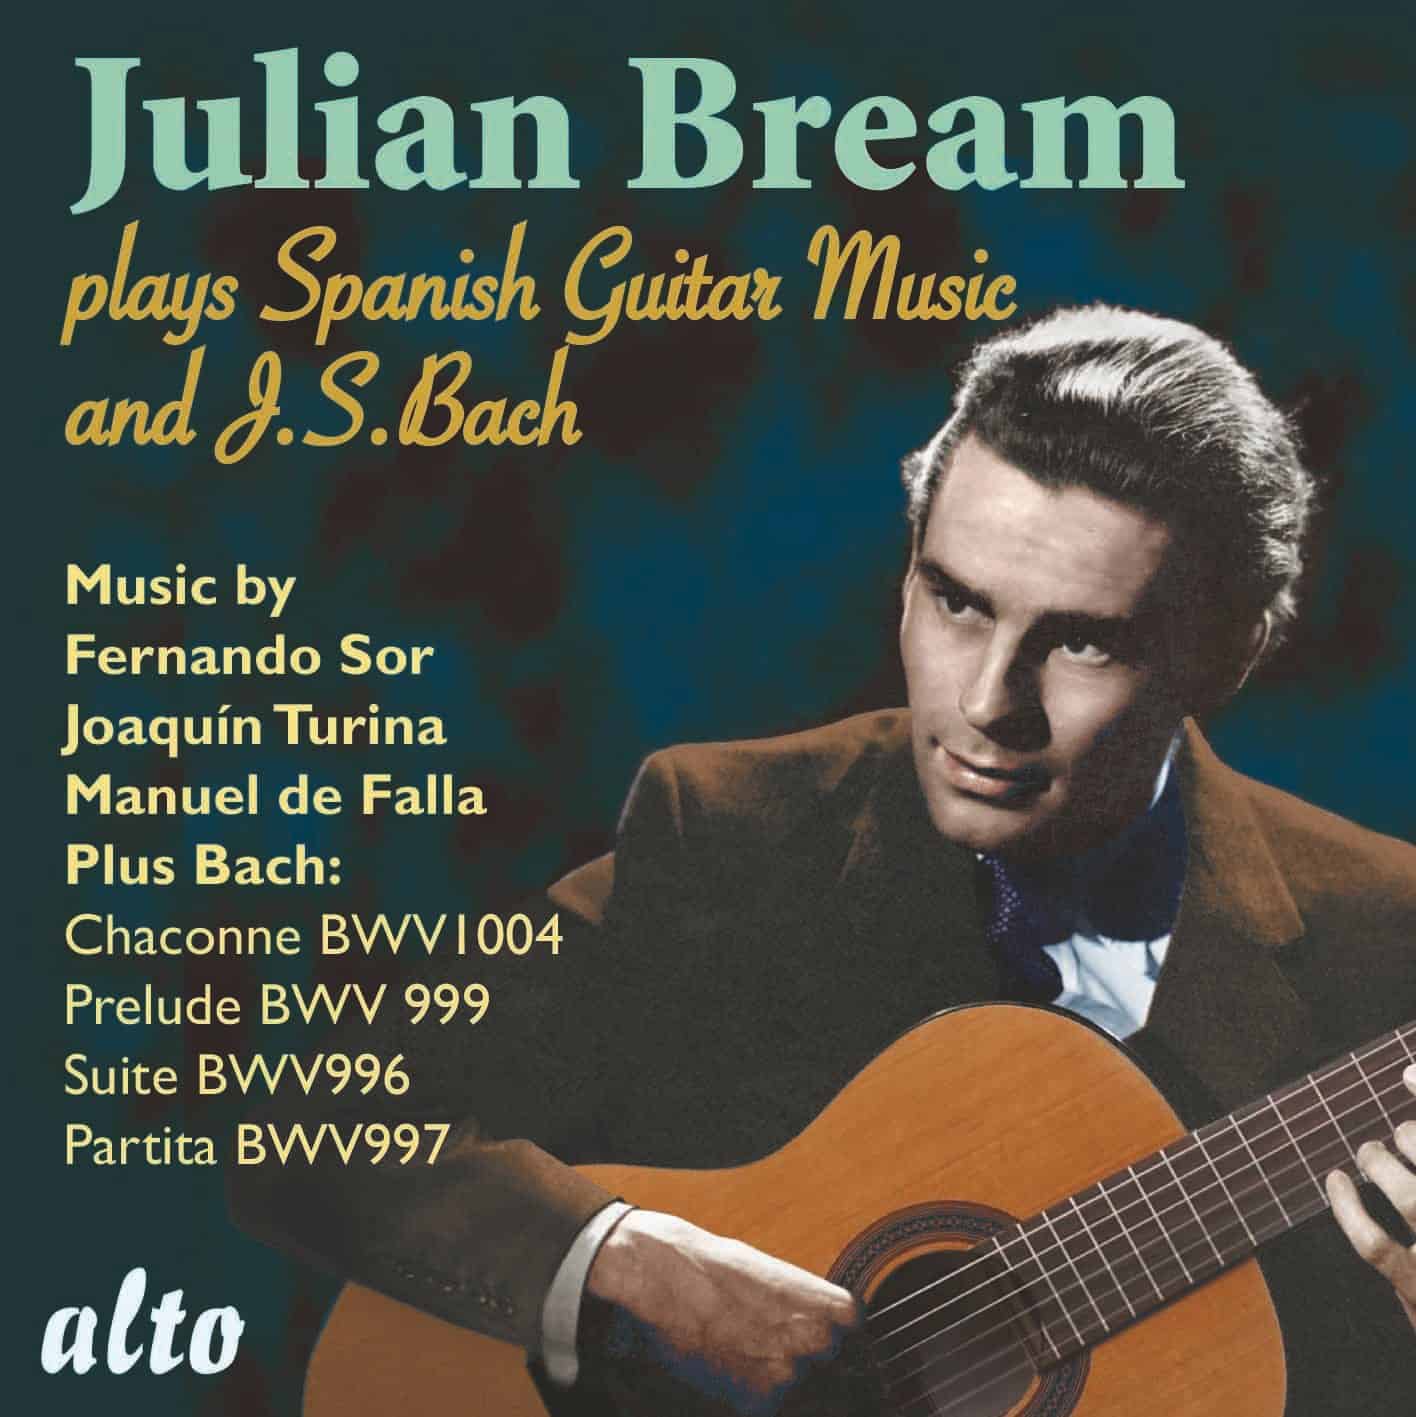 Julian Bream Plays Spanish Guitar Music and J.S. Bach